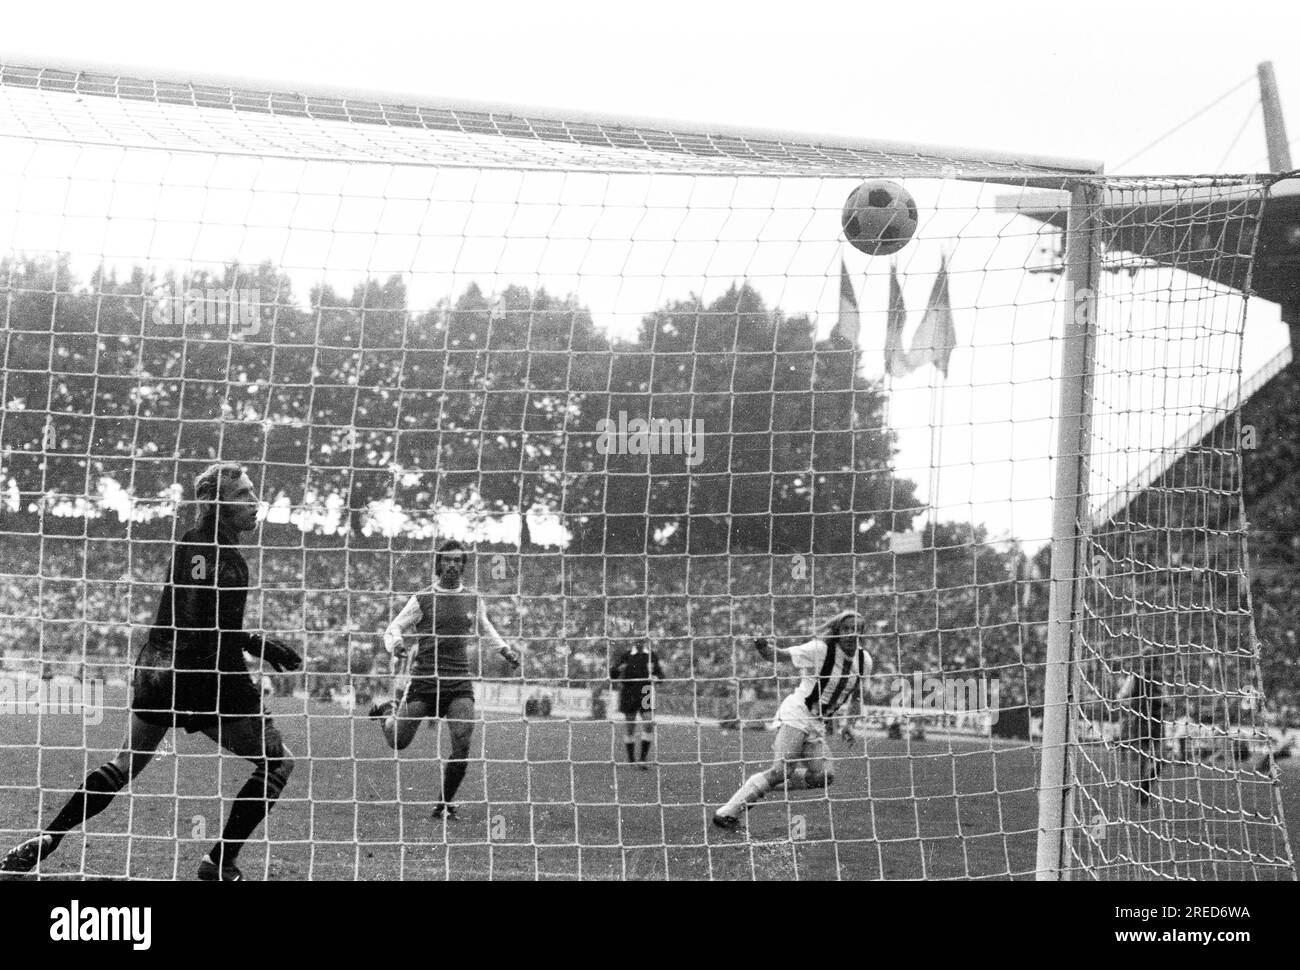 DFB Cup Final 1973: Borussia Mönchengladbach - 1. FC Köln 2:1 / Guenter Netzer scores the goal to make it 2:1 against goalkeeper Gerhard Welz [automated translation] Stock Photo